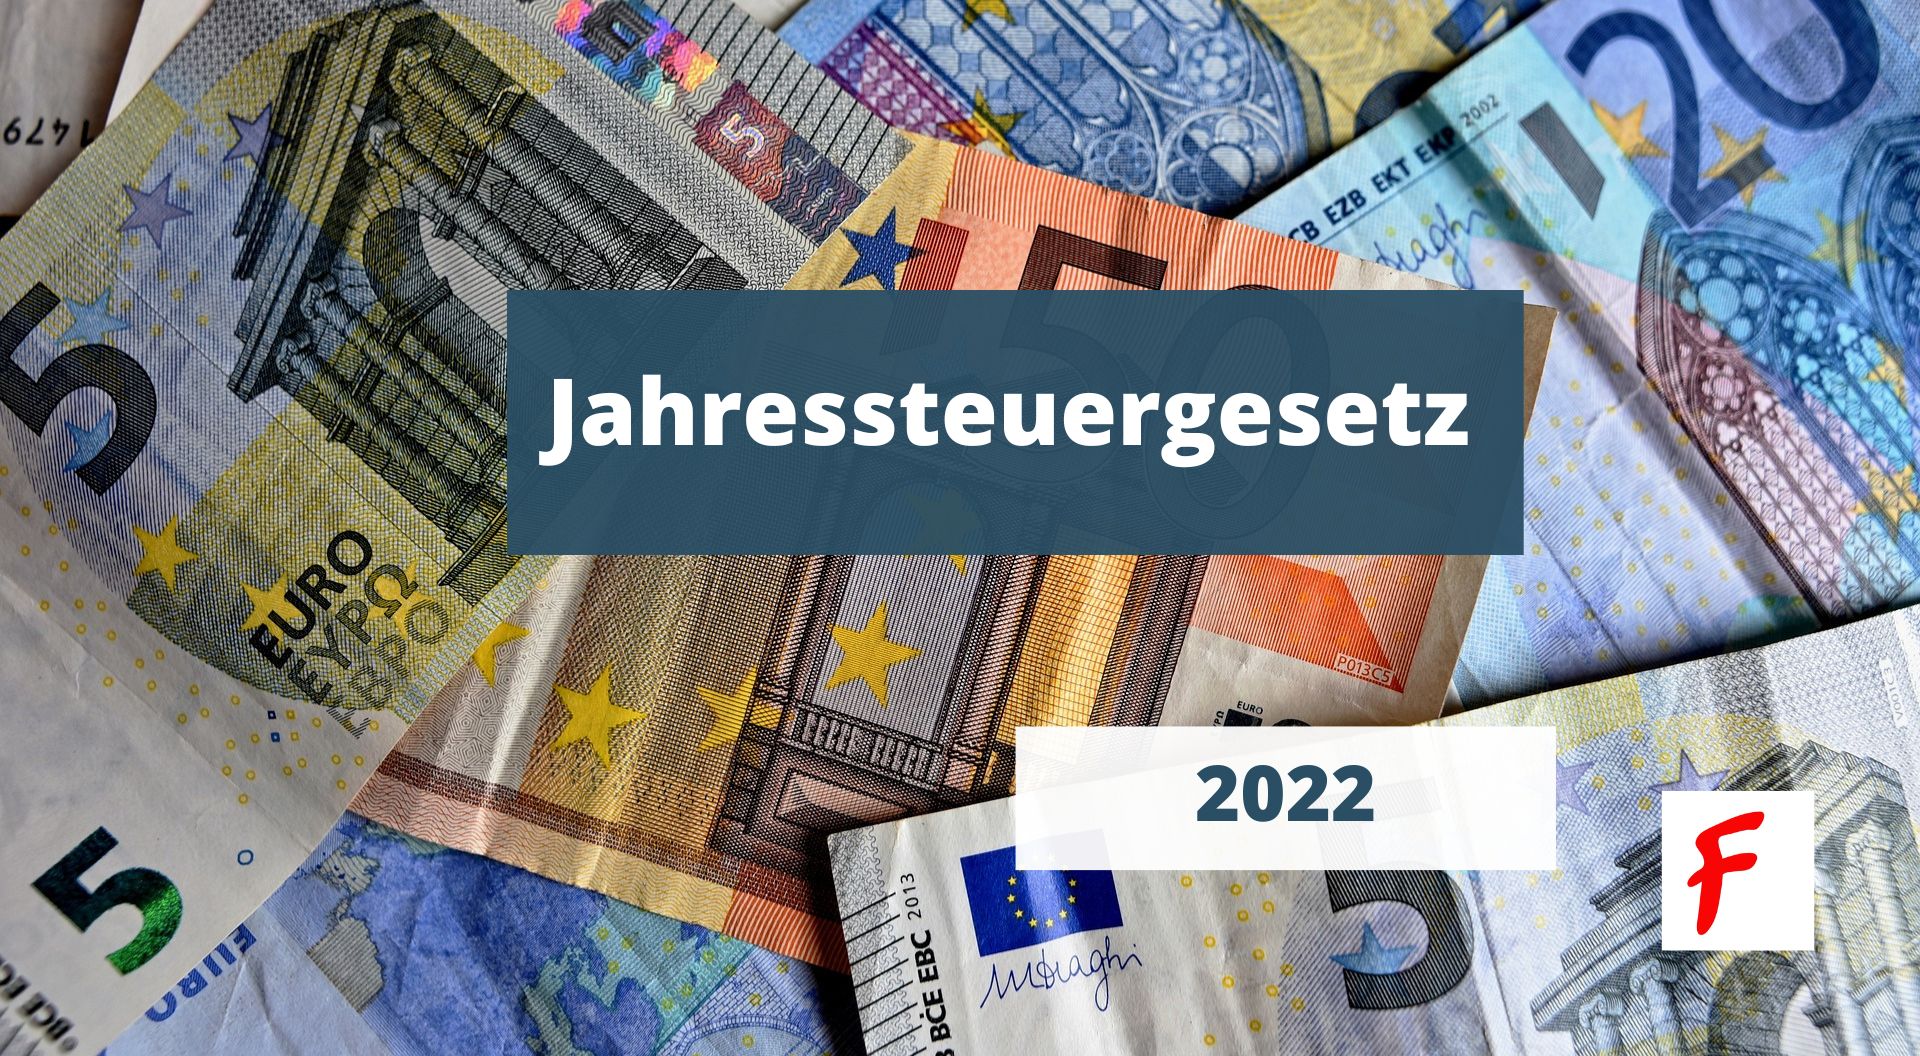 Налоговый закон 2022 года (Jahressteuergesetz 2022)